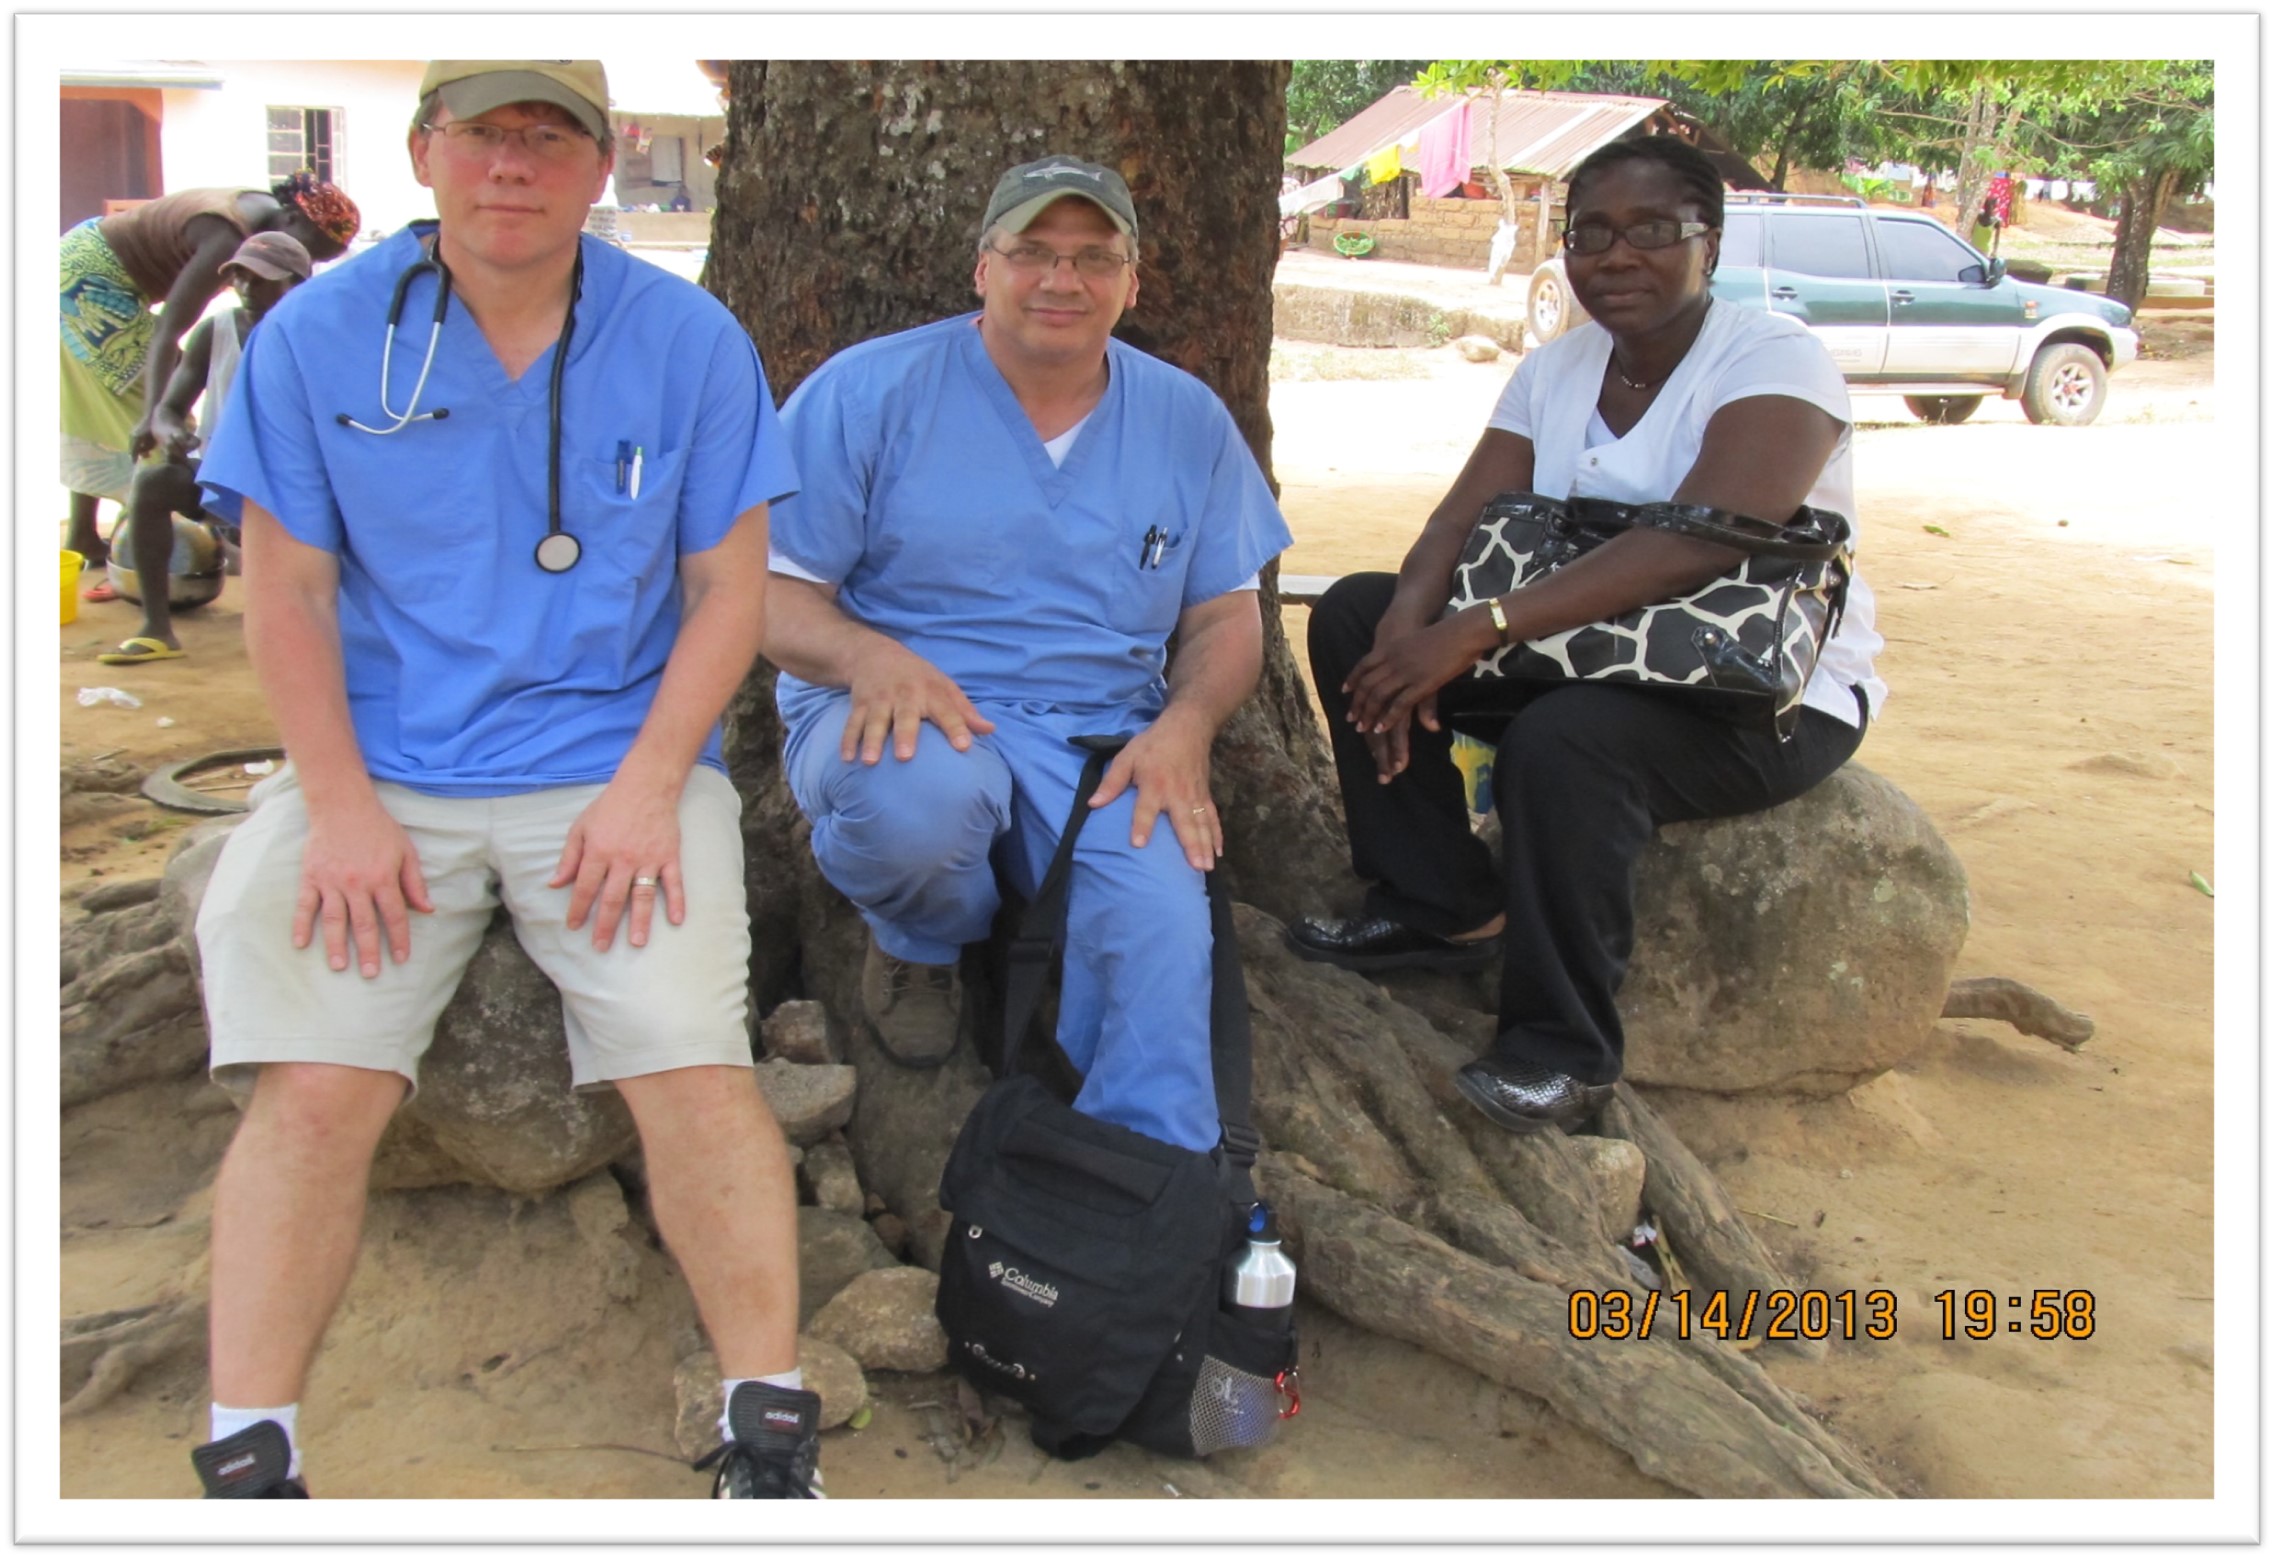 Myron, Phebian and Paul, early days of Sierra Leone (2013)